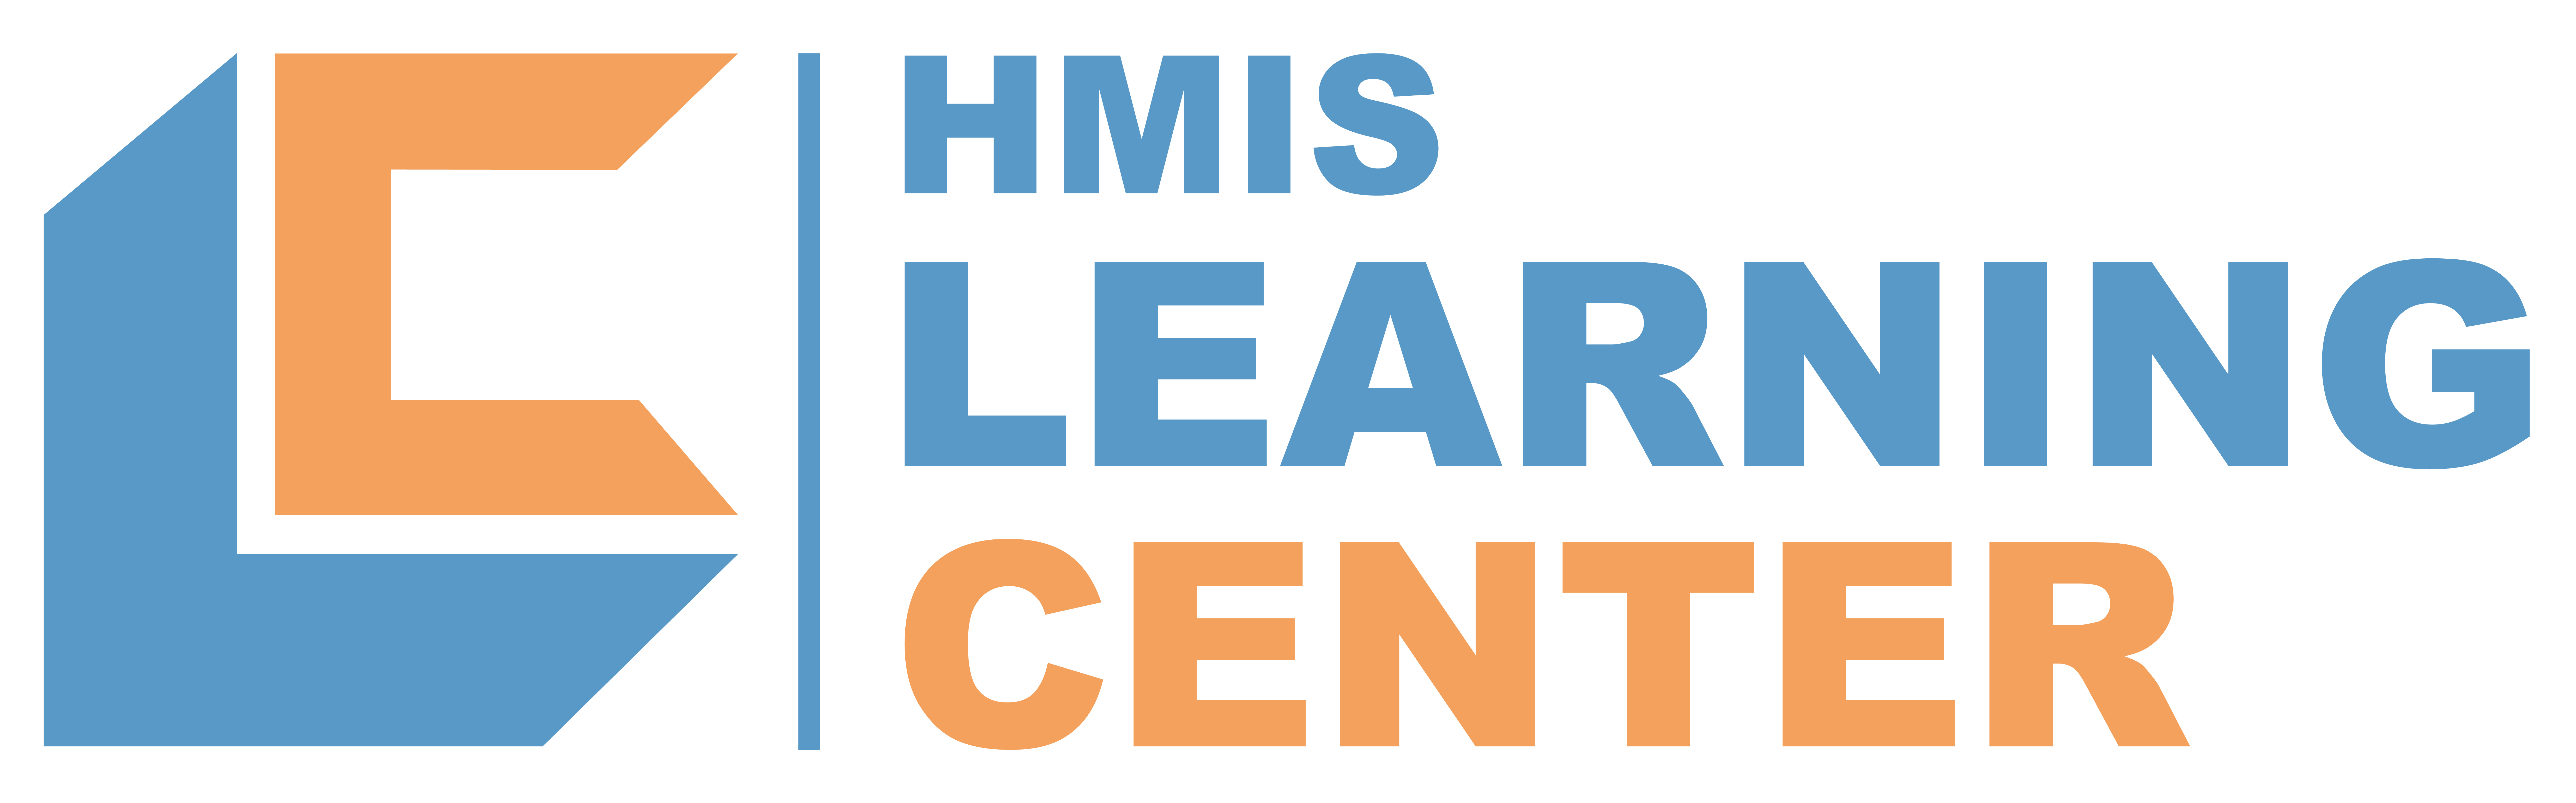 2023 HMIS Learning Center